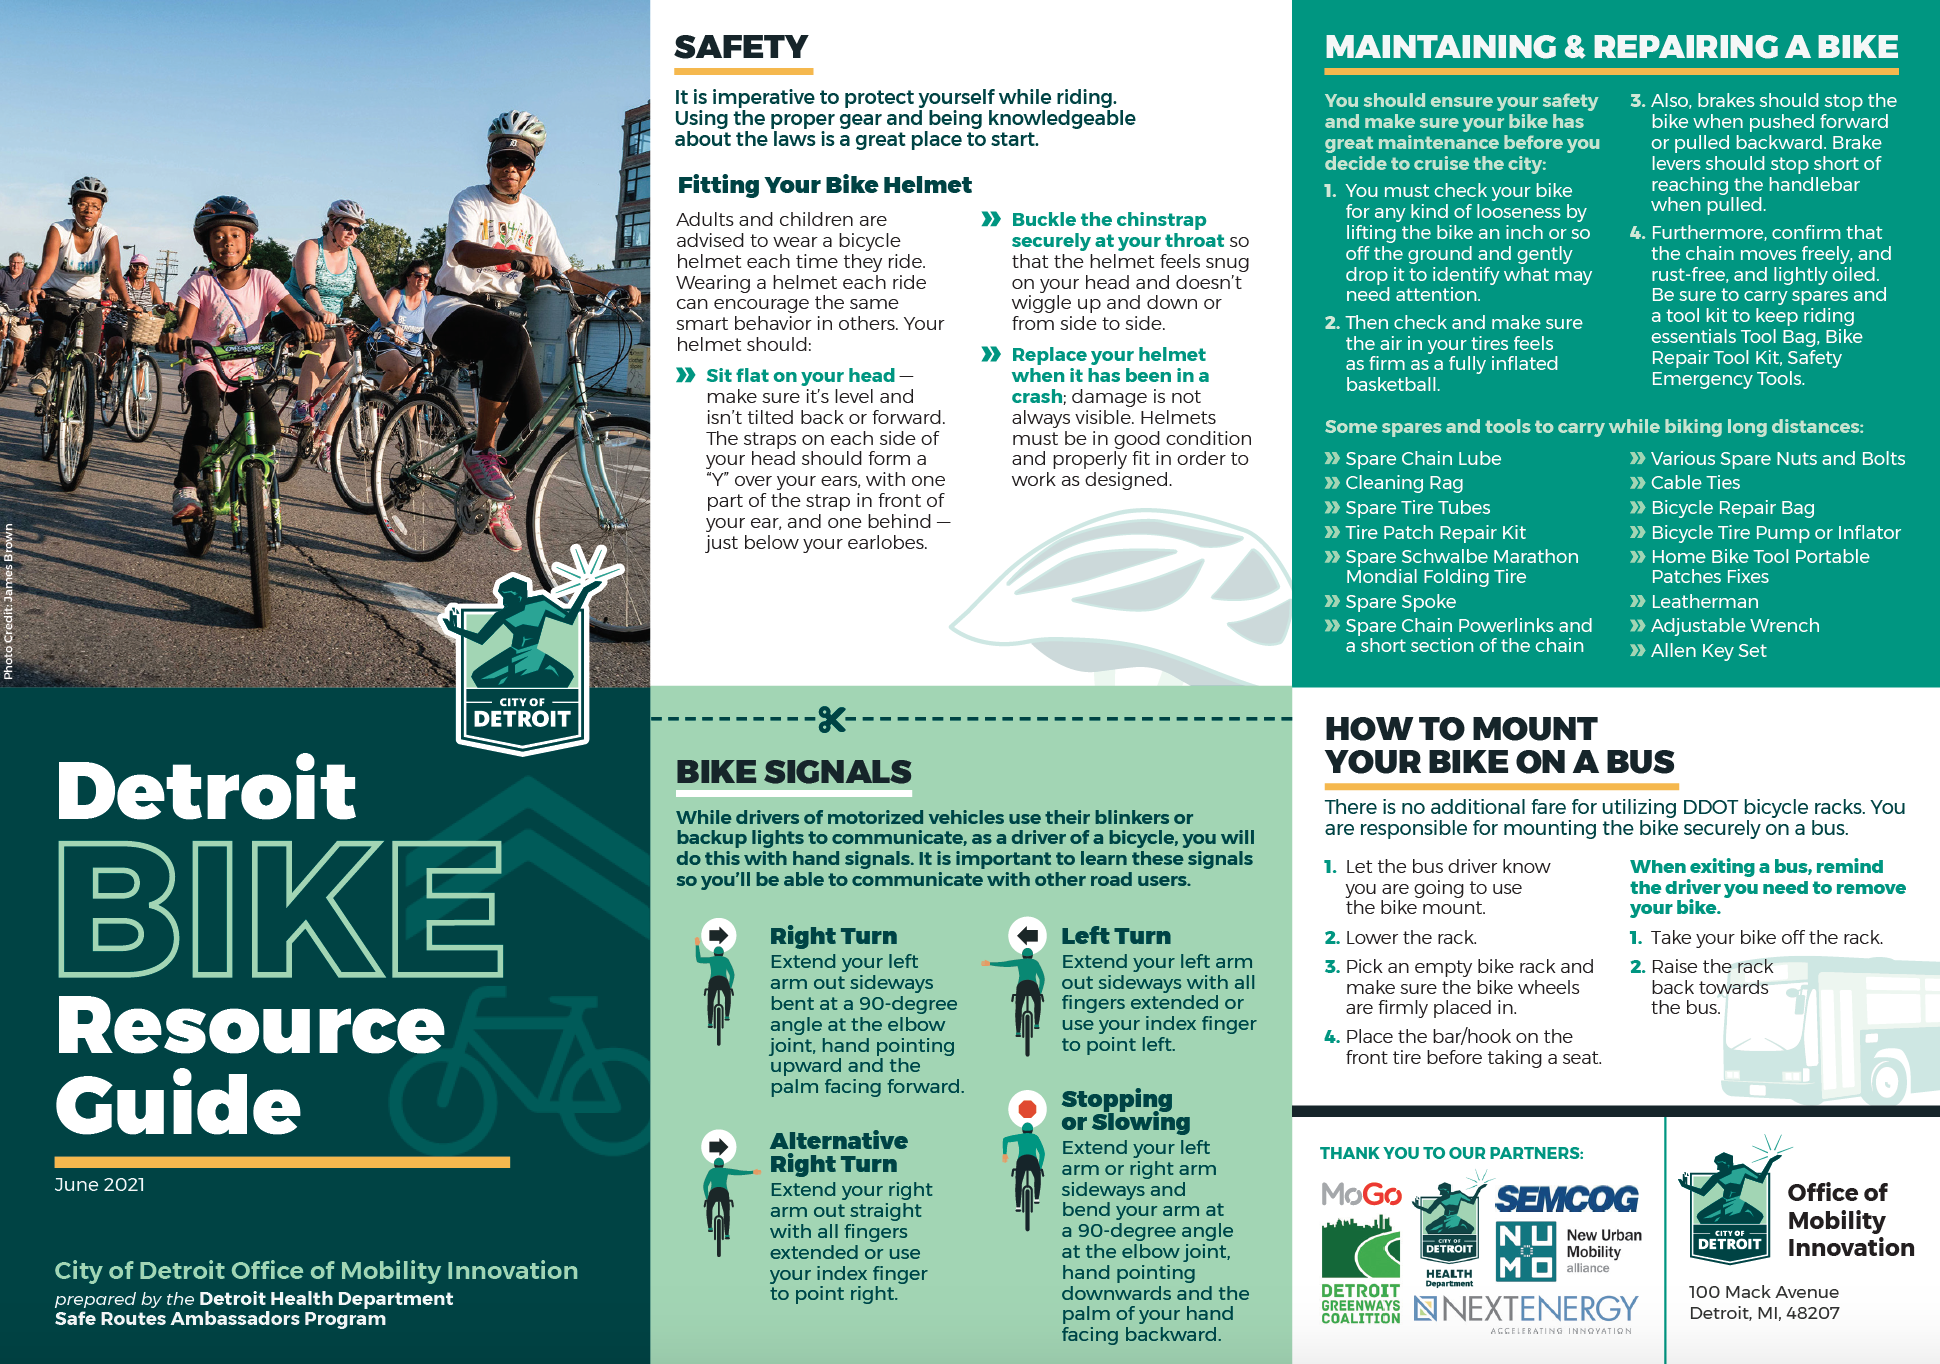 Bike Resource Guide